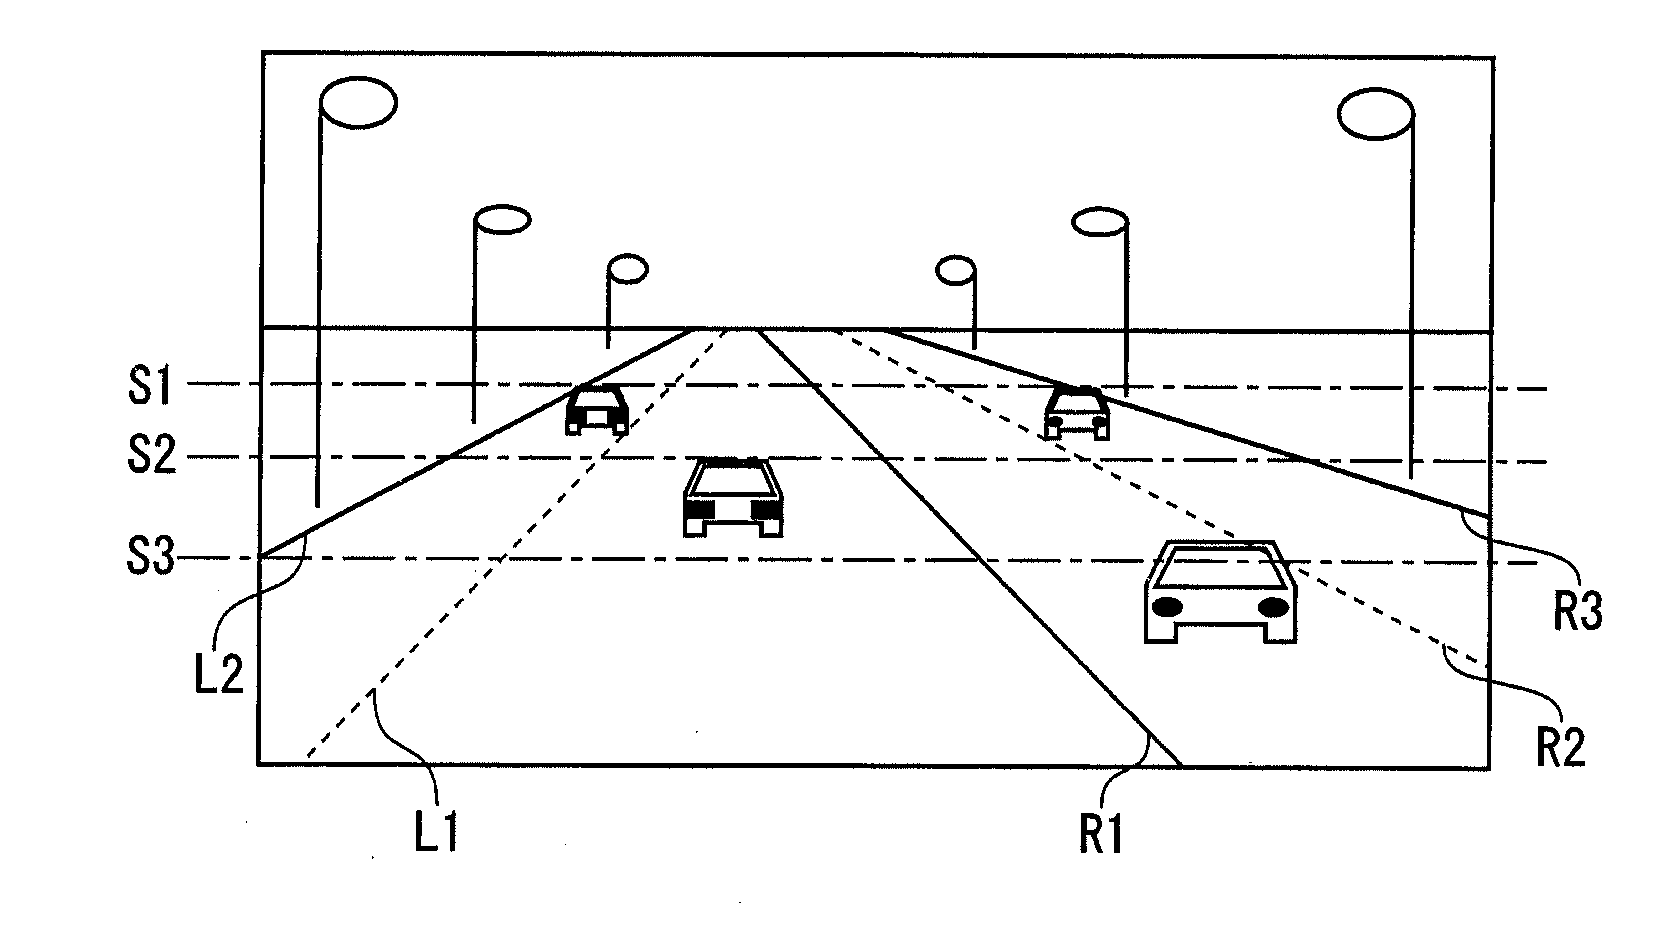 Vehicle detection apparatus